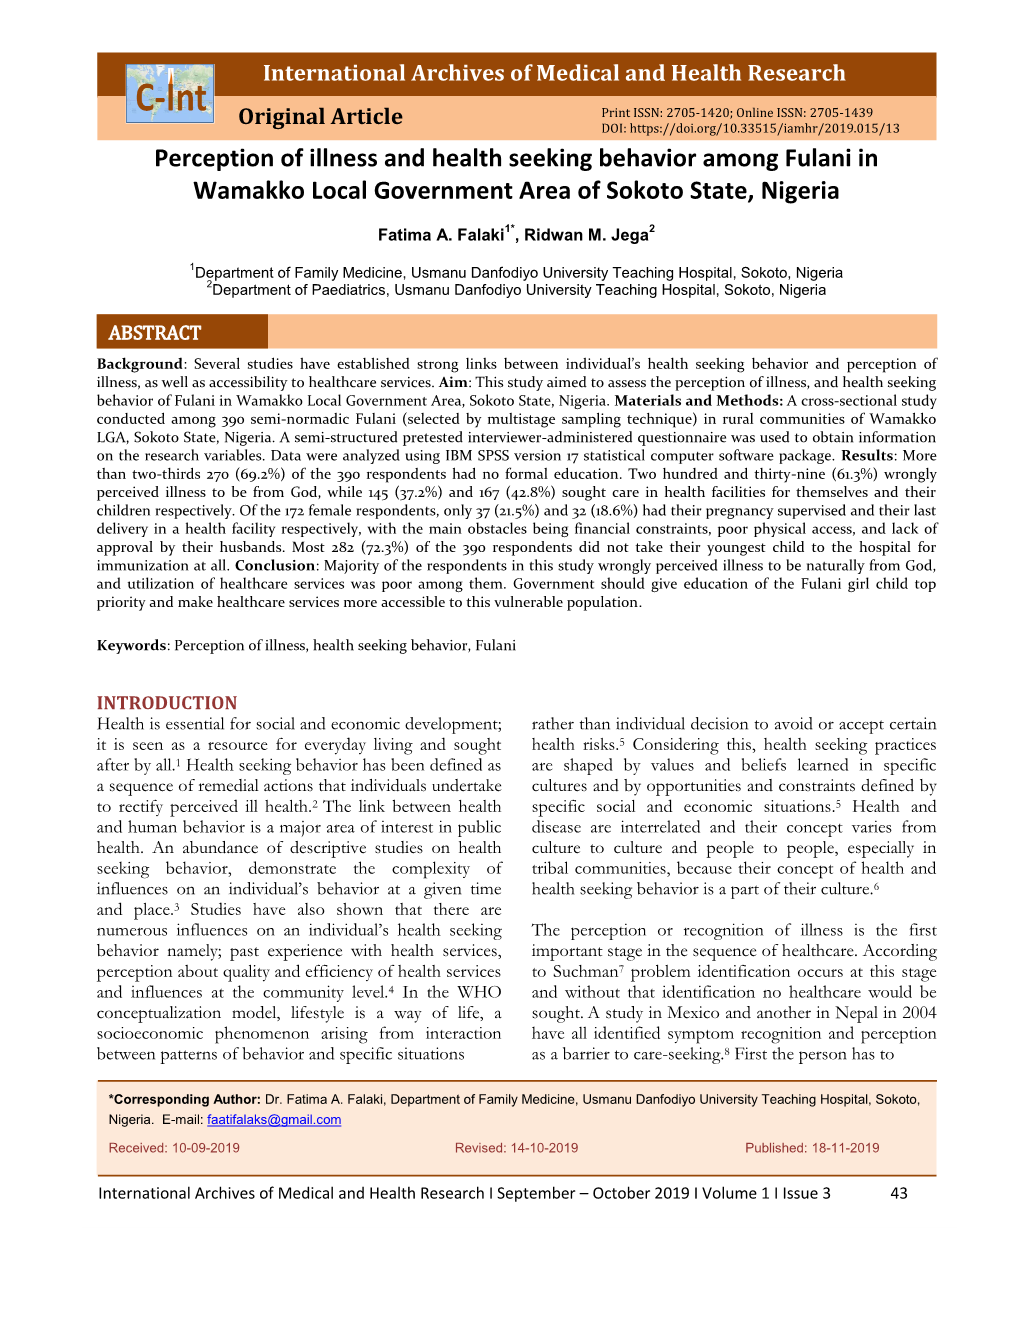 Perception of Illness and Health Seeking Behavior Among Fulani in Wamakko Local Government Area of Sokoto State, Nigeria